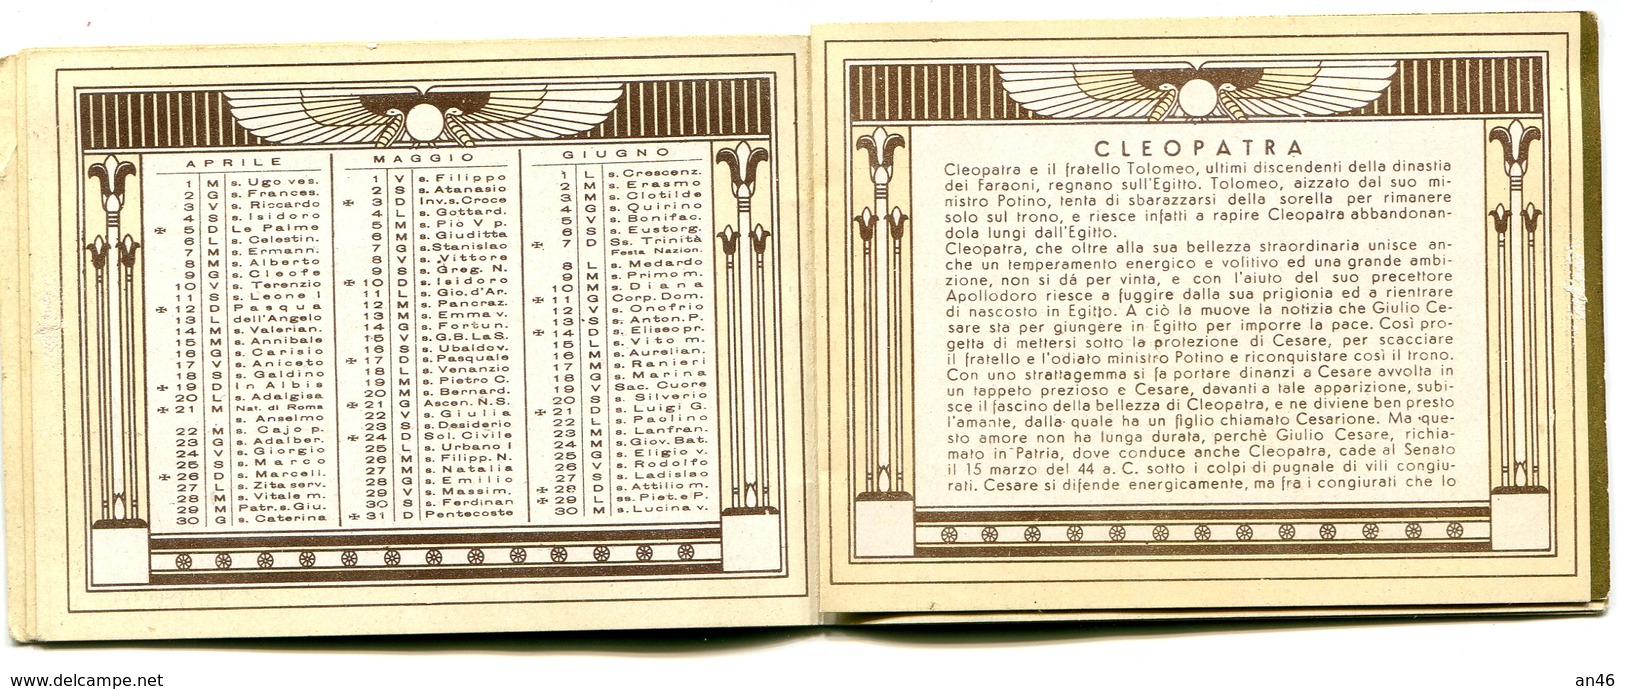 Calendario-Calendarietto-Calendrier-Kalender-Calendar-1936 "CLEOPATRA"Completo- Integro E Originale 100% - Grand Format : 1921-40